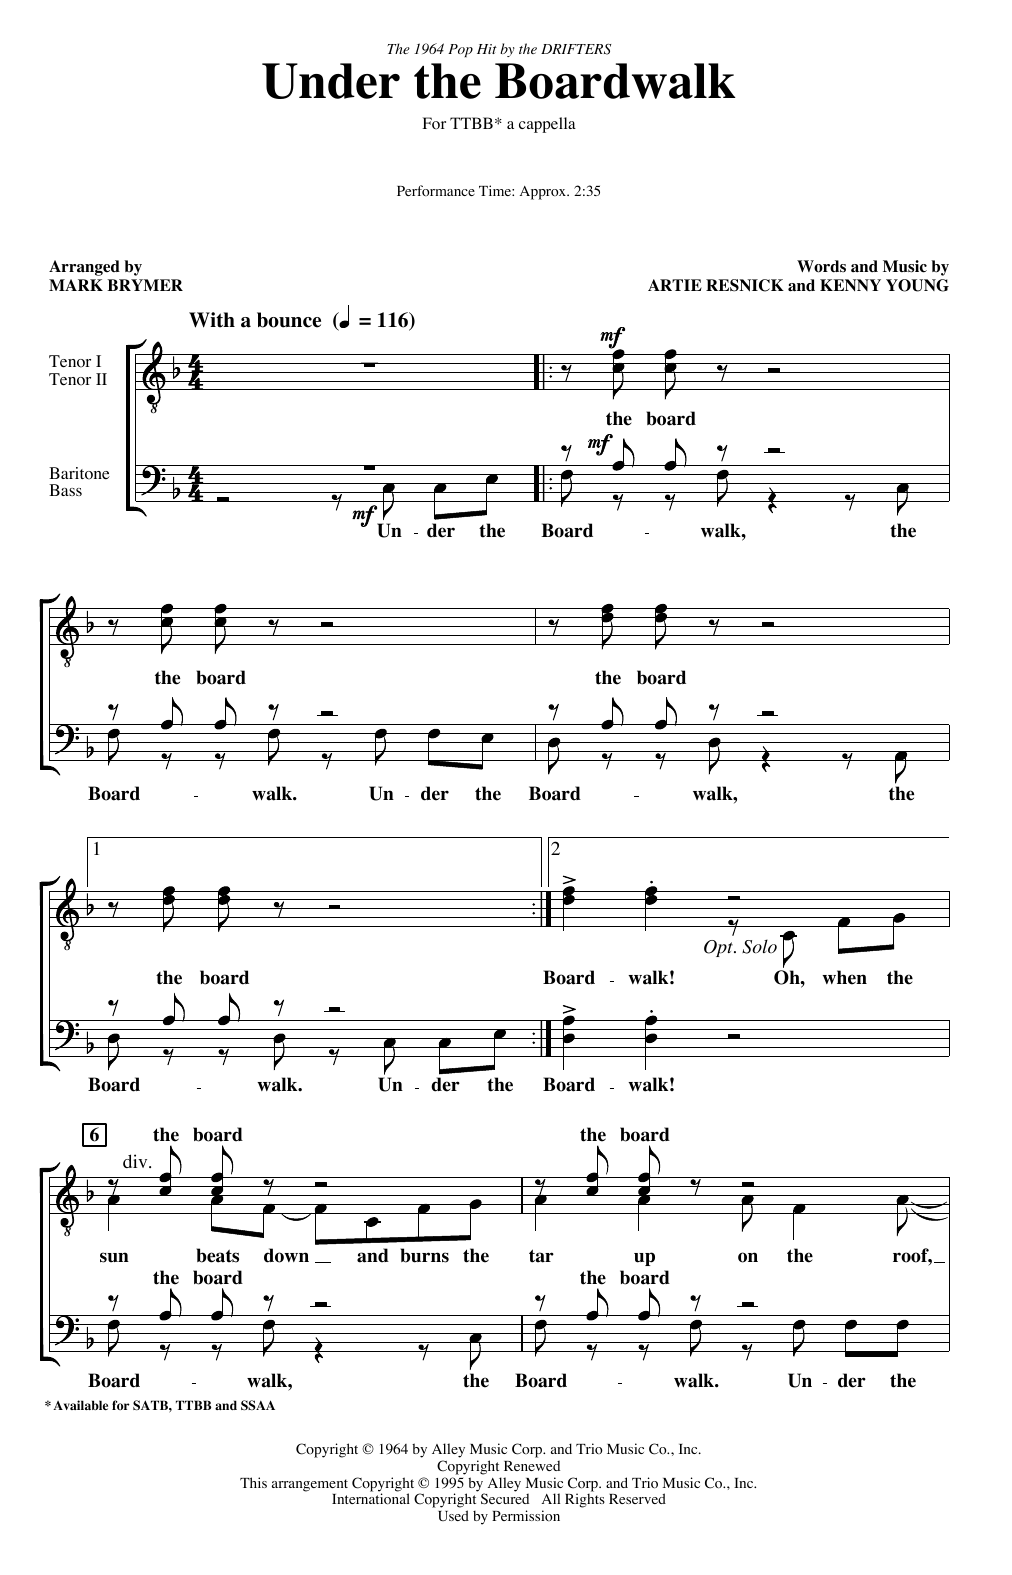 The Drifters Under The Boardwalk (arr. Mark Brymer) Sheet Music Notes & Chords for TTBB Choir - Download or Print PDF